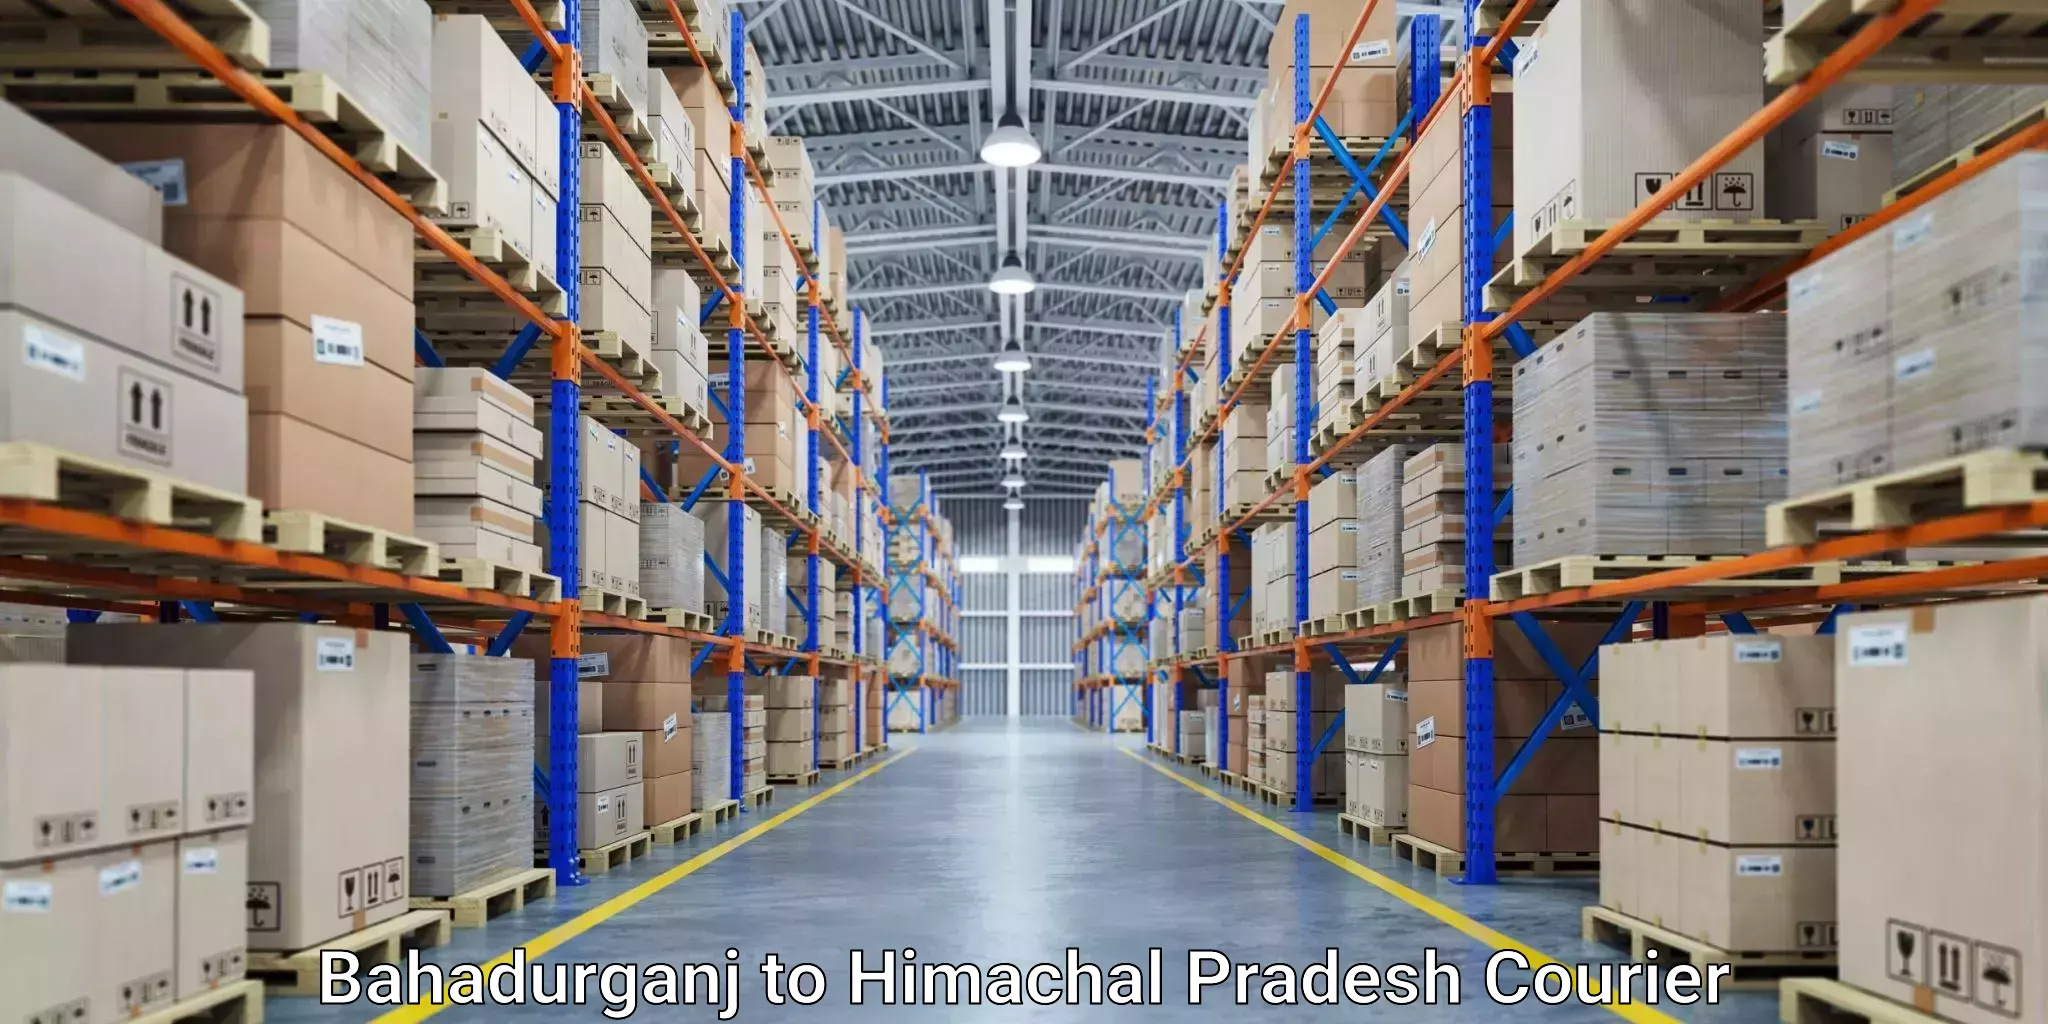 Global logistics network Bahadurganj to Himachal Pradesh